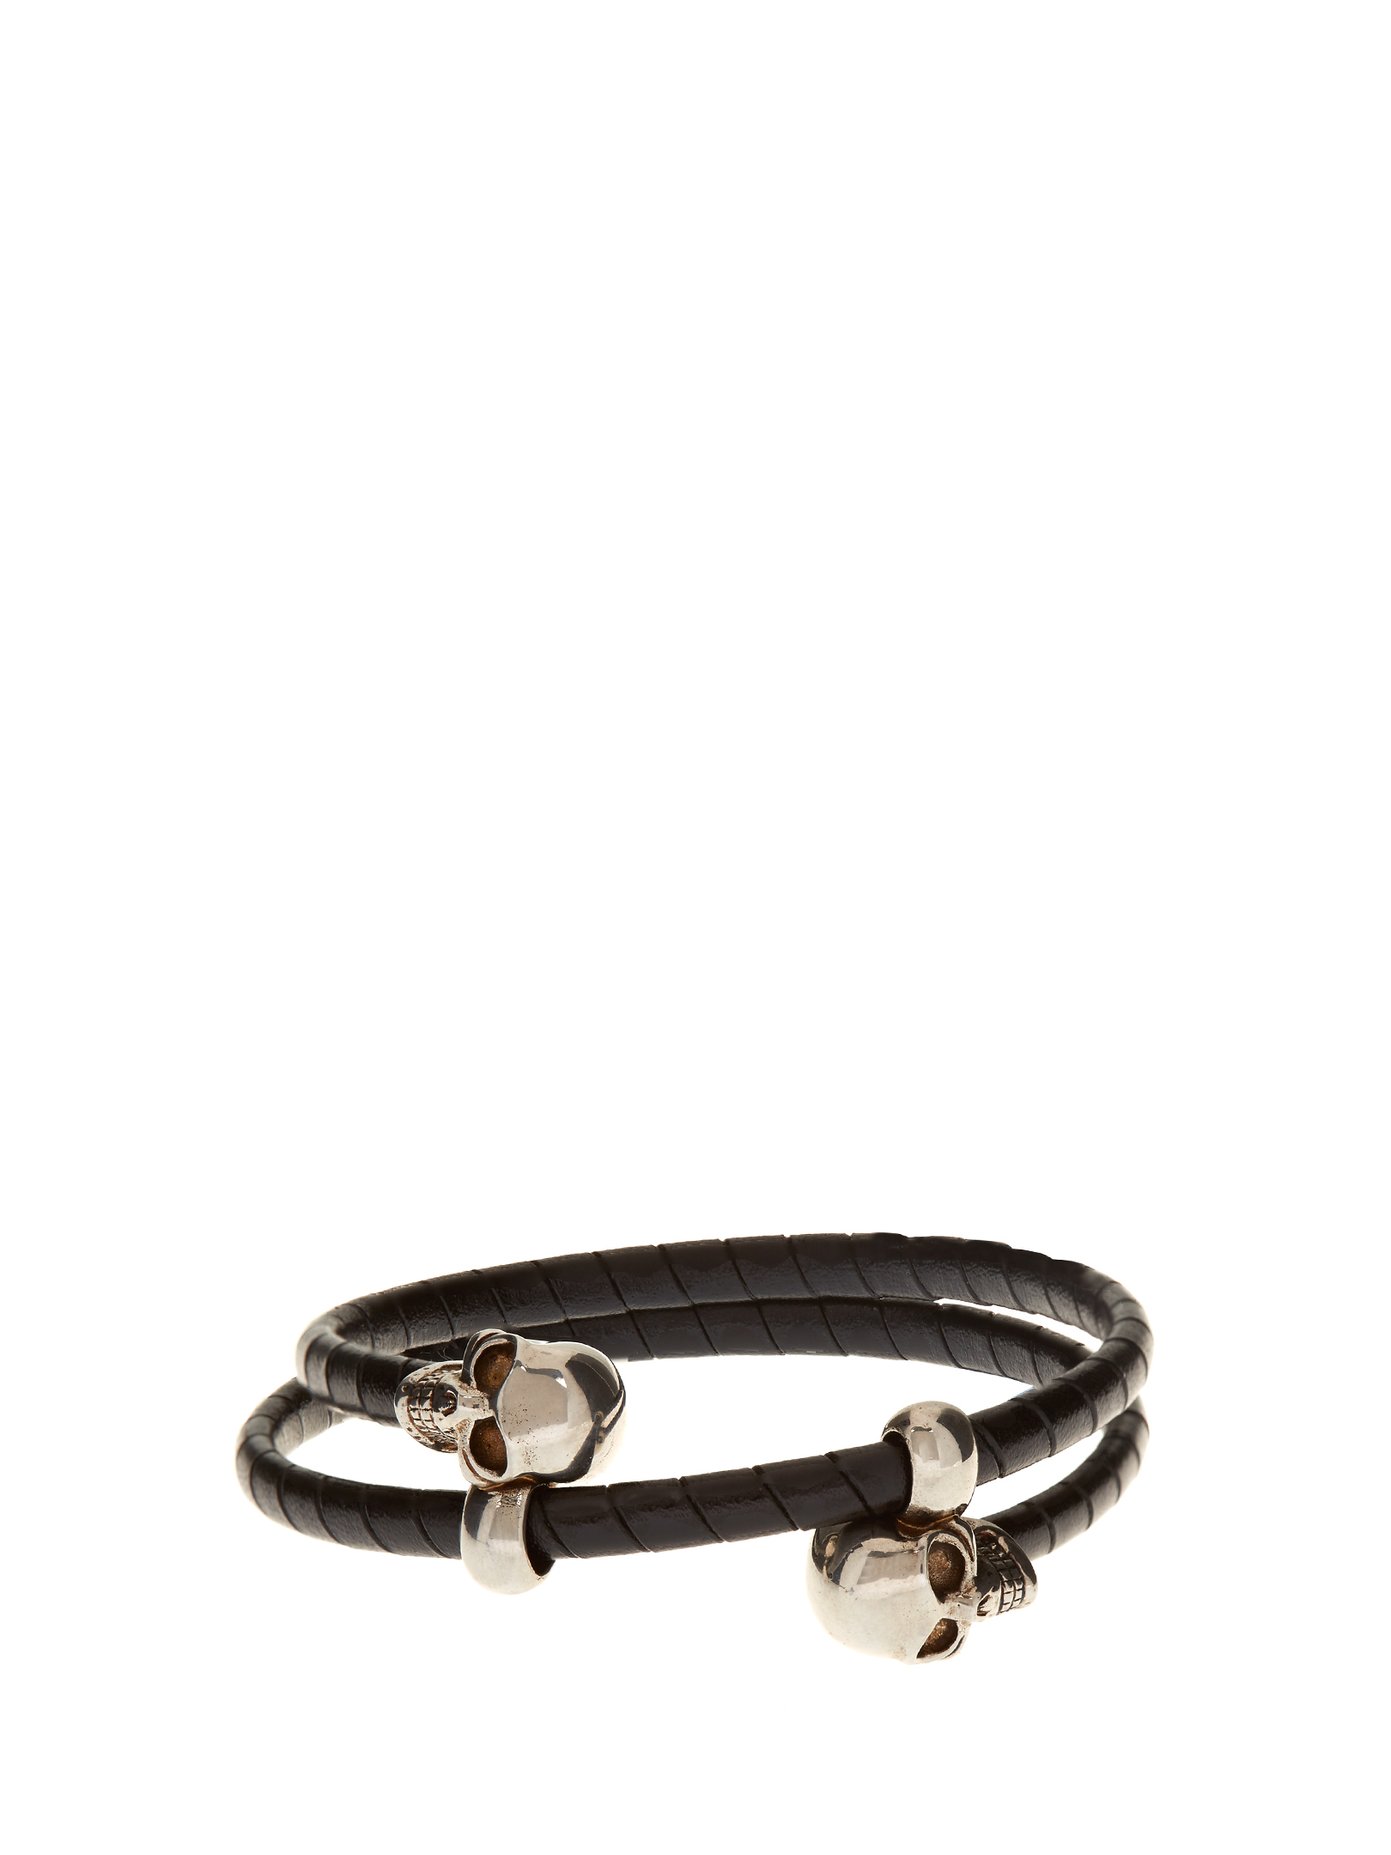 mcqueen leather bracelet